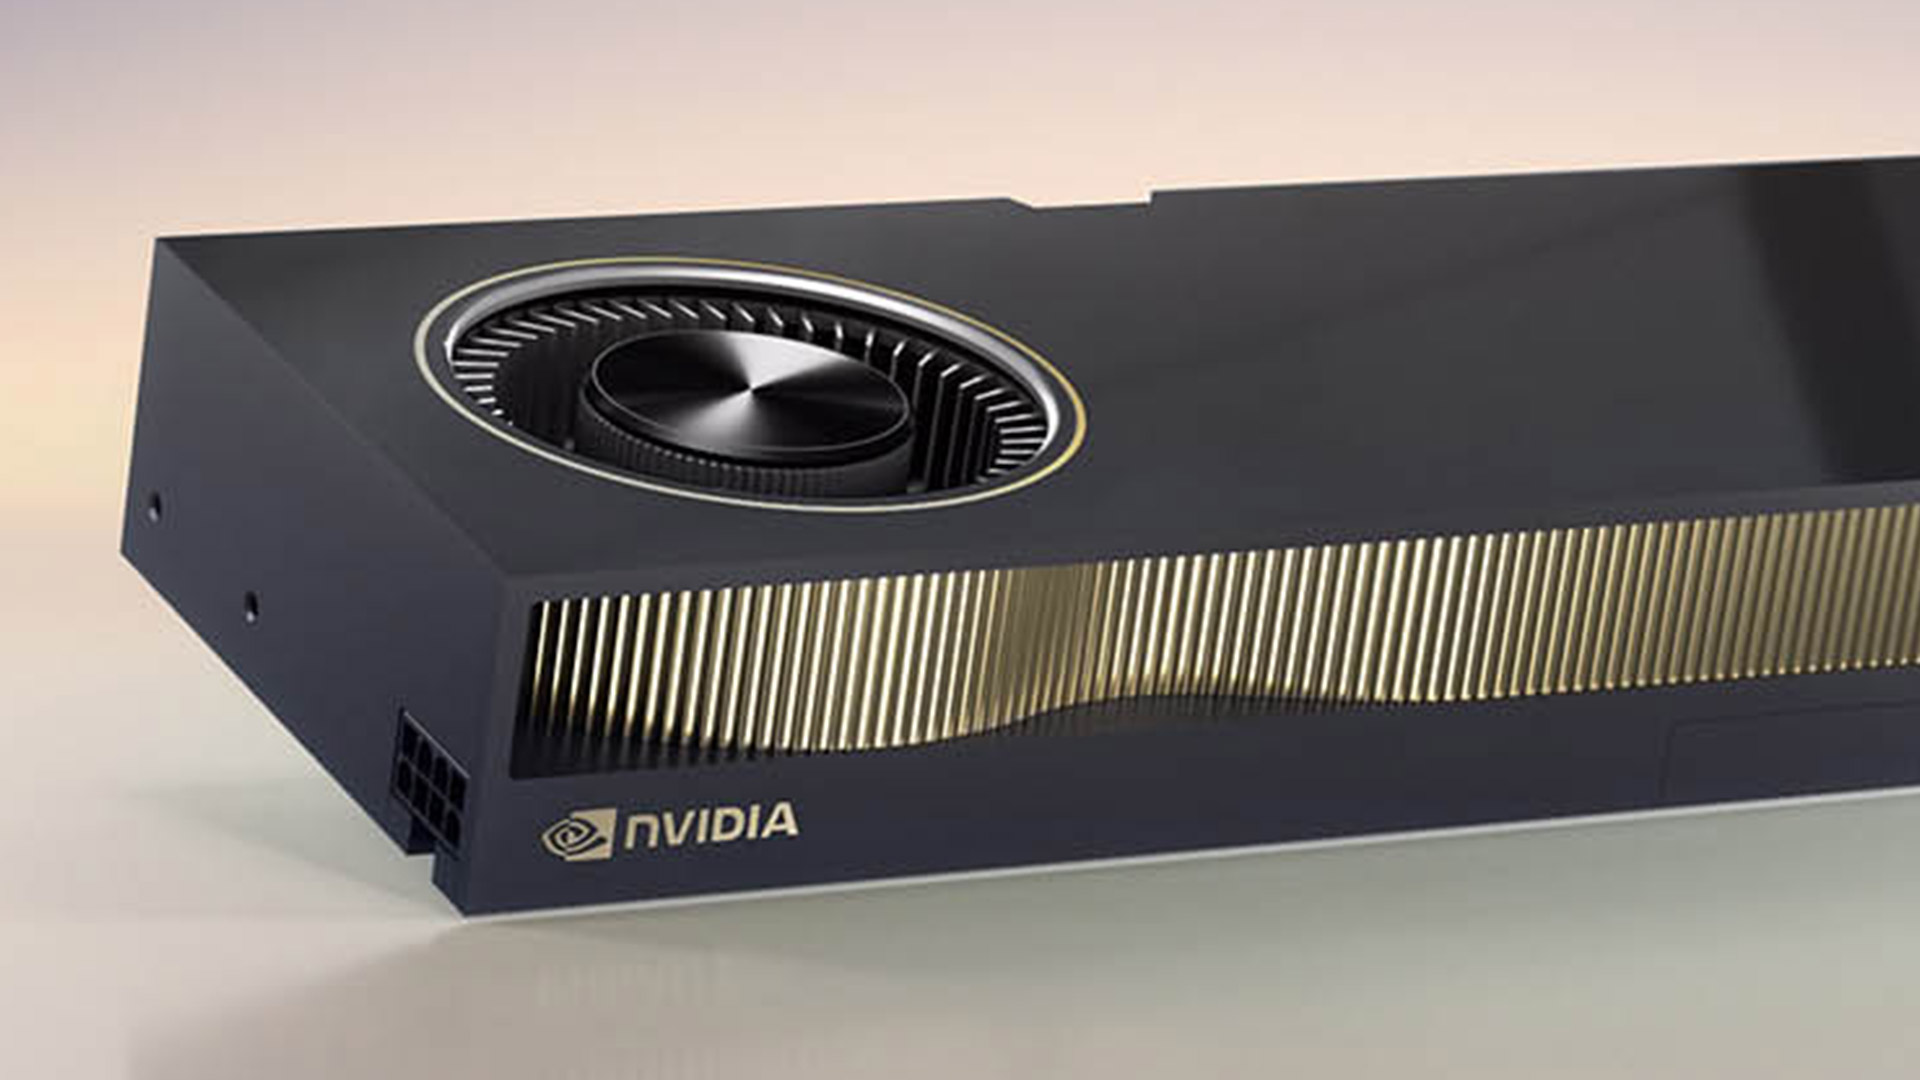 Nvidia RTX 6000 Ada Generation